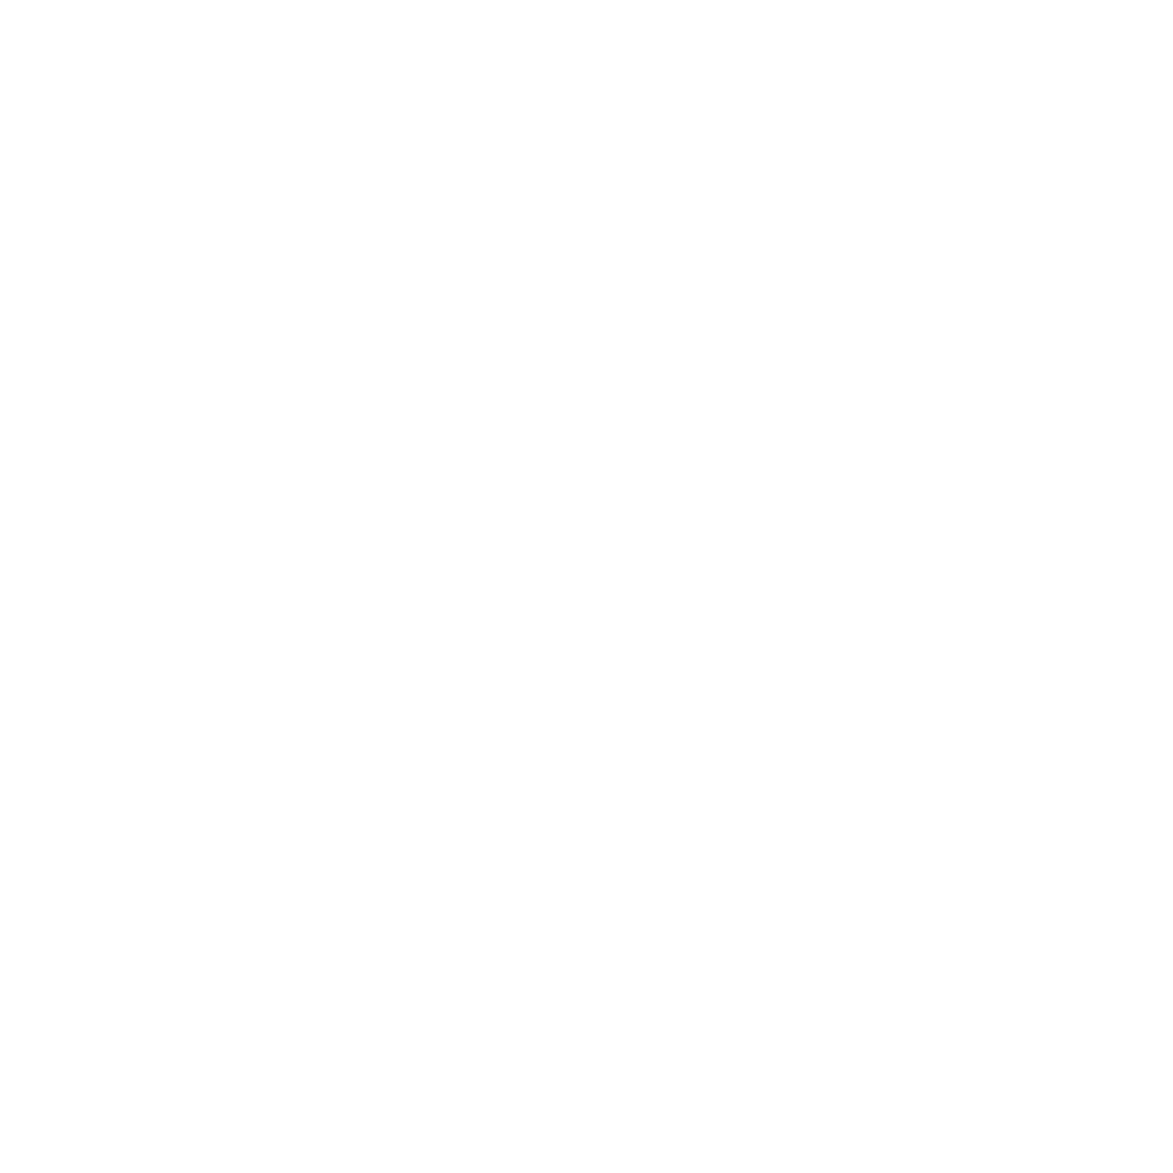 Commuter style bike icon